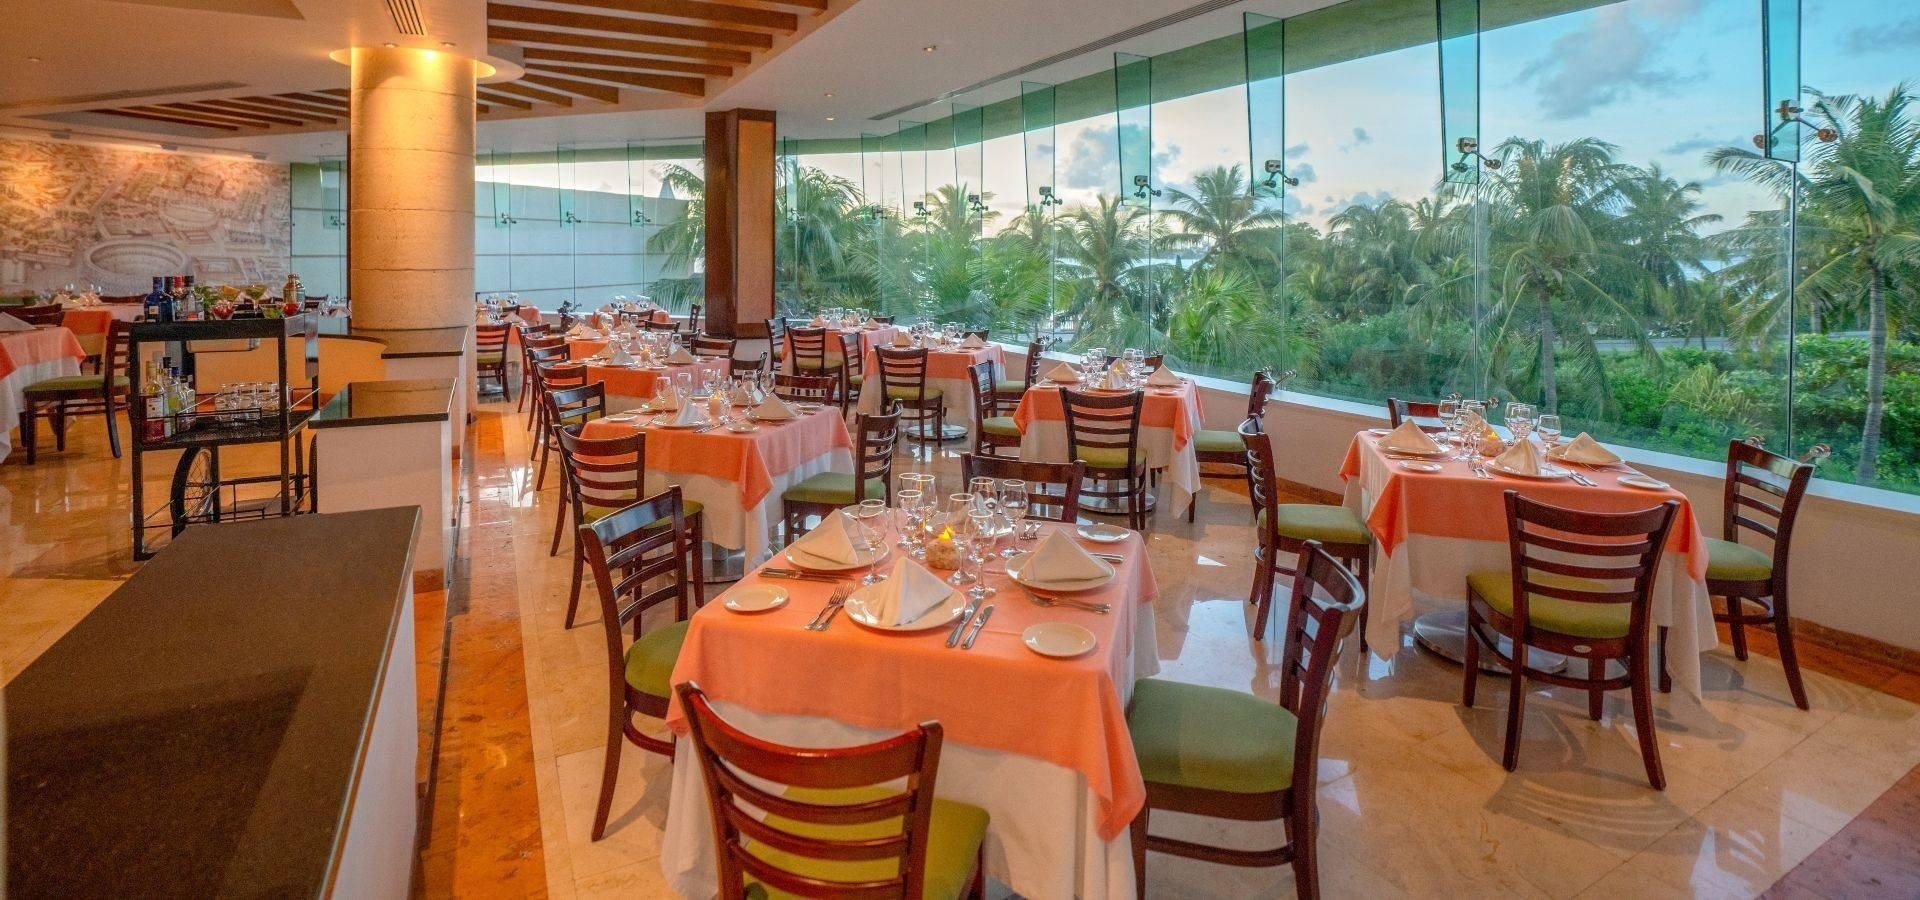 El Mirador restaurant overlooking the palm garden of The Villas by Grand Park Royal Cancun